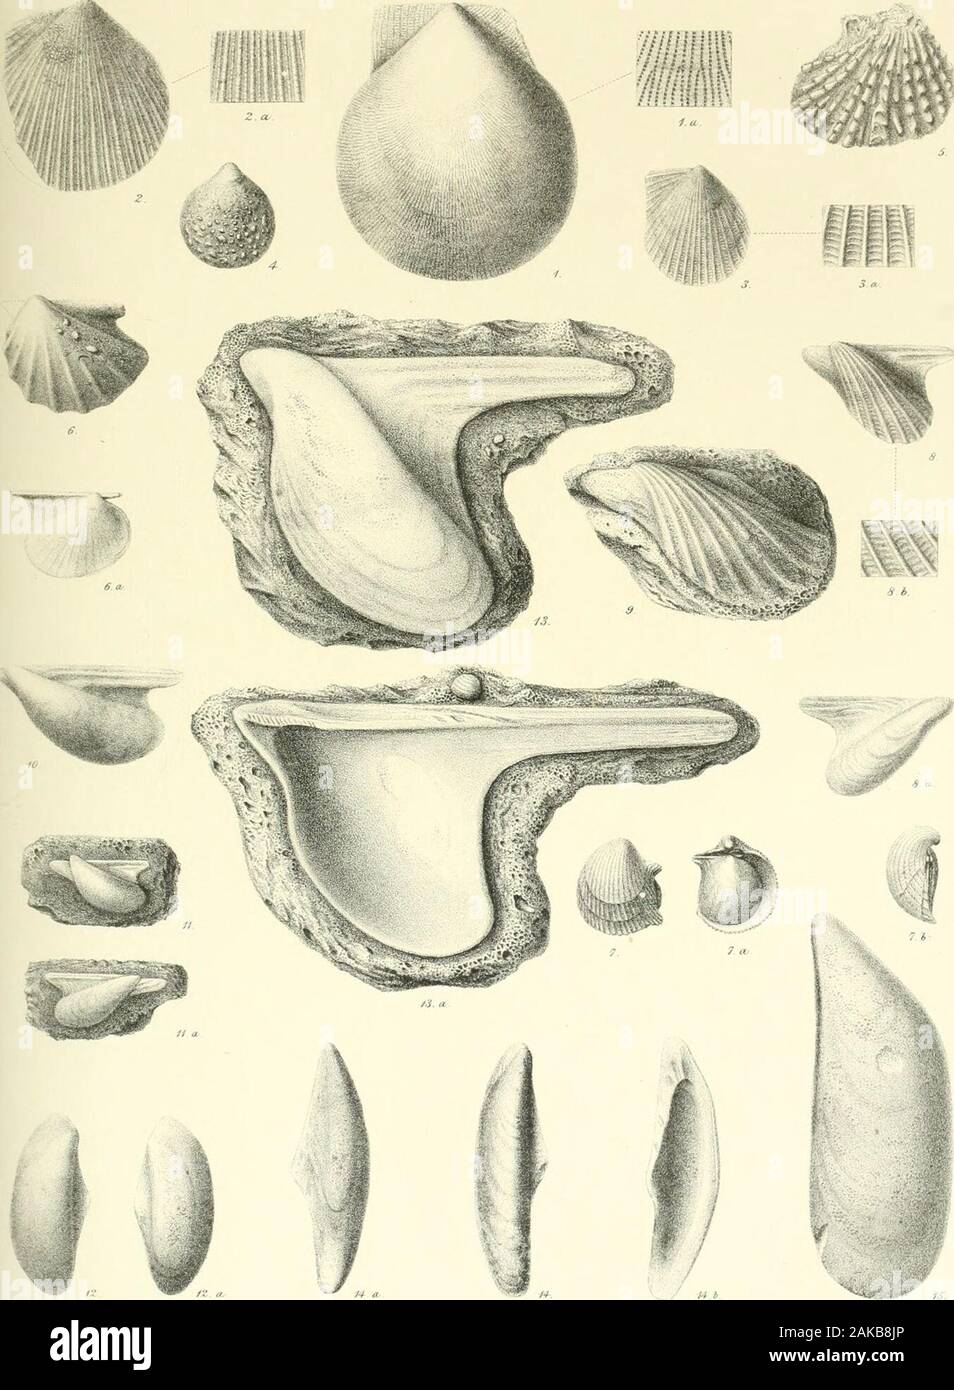 A monograph of the Mollusca from the Great Oolite chiefly from Minchinhampton and the coast of Yorkshire . ! •. TAB. III. Fig.1. Perna rugosa, p. 25. ?2. 2 a. Lima cardiiformis, p. 27. 3, 3 a. „ semicircularis, p. 29. 4. „ Luciensis, p. 28. 5, 5 a. ,, ovalis, p. 29. 6, 6 a. „ duplicata, p. 26. 7, la. „ gibbosa,/;. 28. 8, 8 a. „ impressa, p* 29. 9, 9 a. ,, bellula,jy. 30. in. Hinge area of Gervillia crassicosta, p. 23 11. Trichites nodosus, j2. 35. 12, 12 a. Genillia acuta, p. 20. 13, 13 a, b. „ subcylindrica, /;. 21. 14. Inoceramus Fittoni, p. 24. Ta.b. HI. Stock Photo